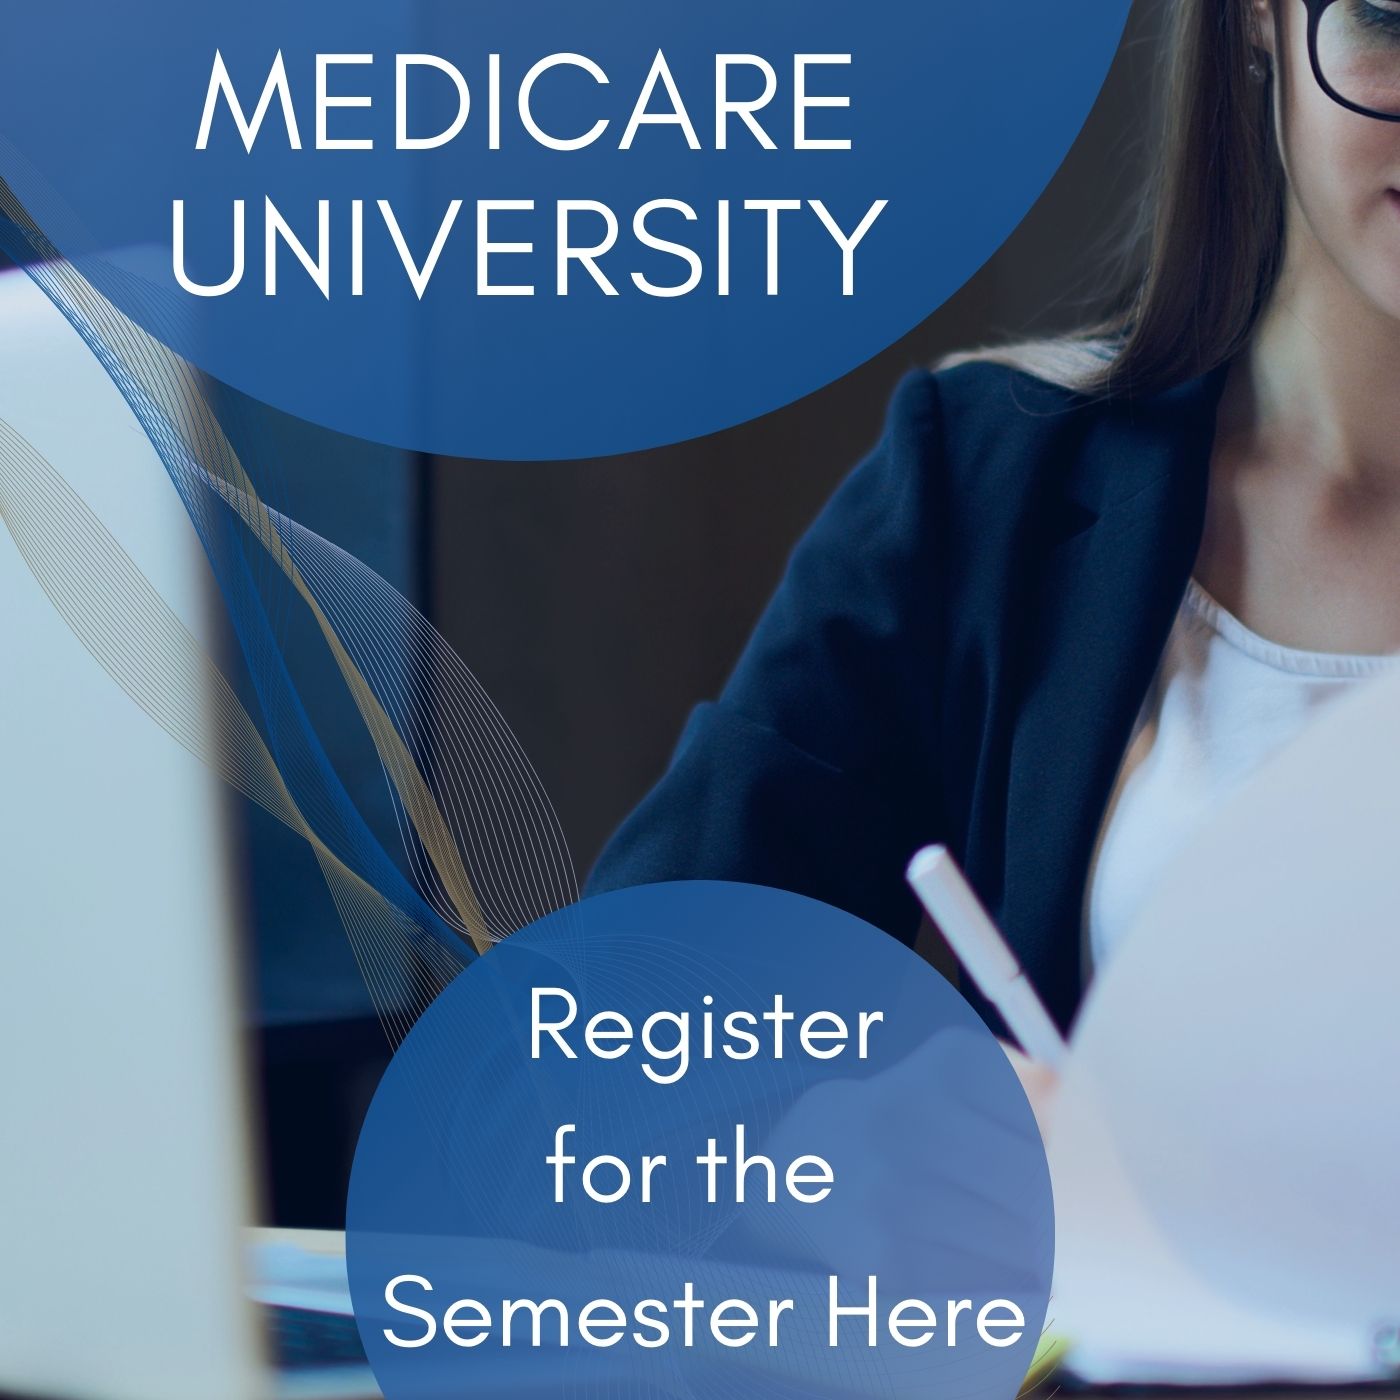 Medicare University 2021 - 1st Semester Registration